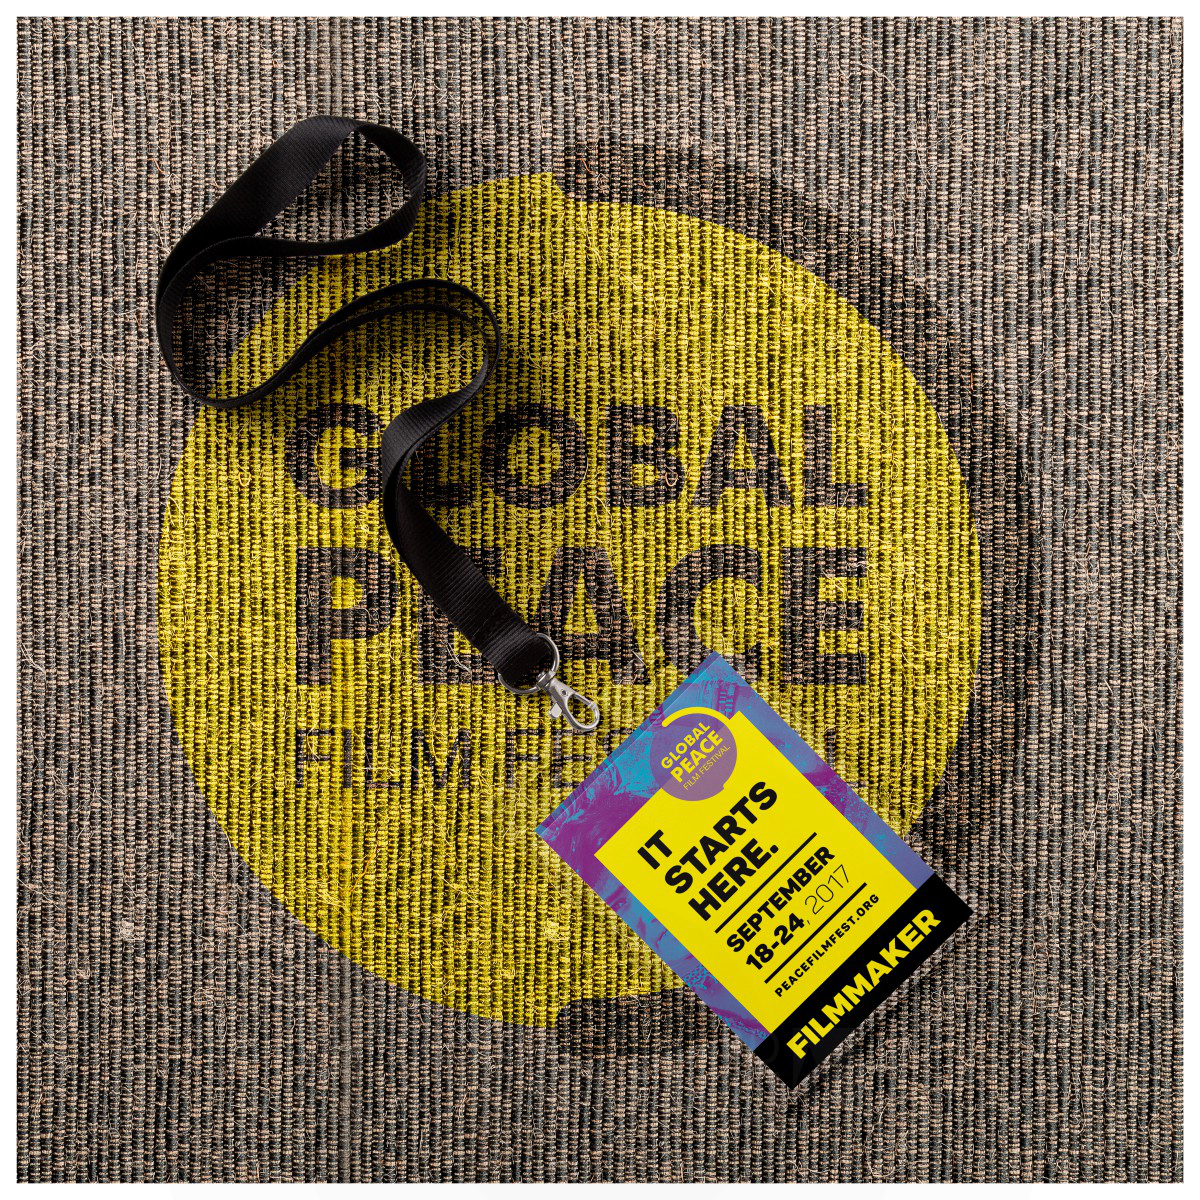 Global Peace Film Festival 2017 <b>Corporate Identity